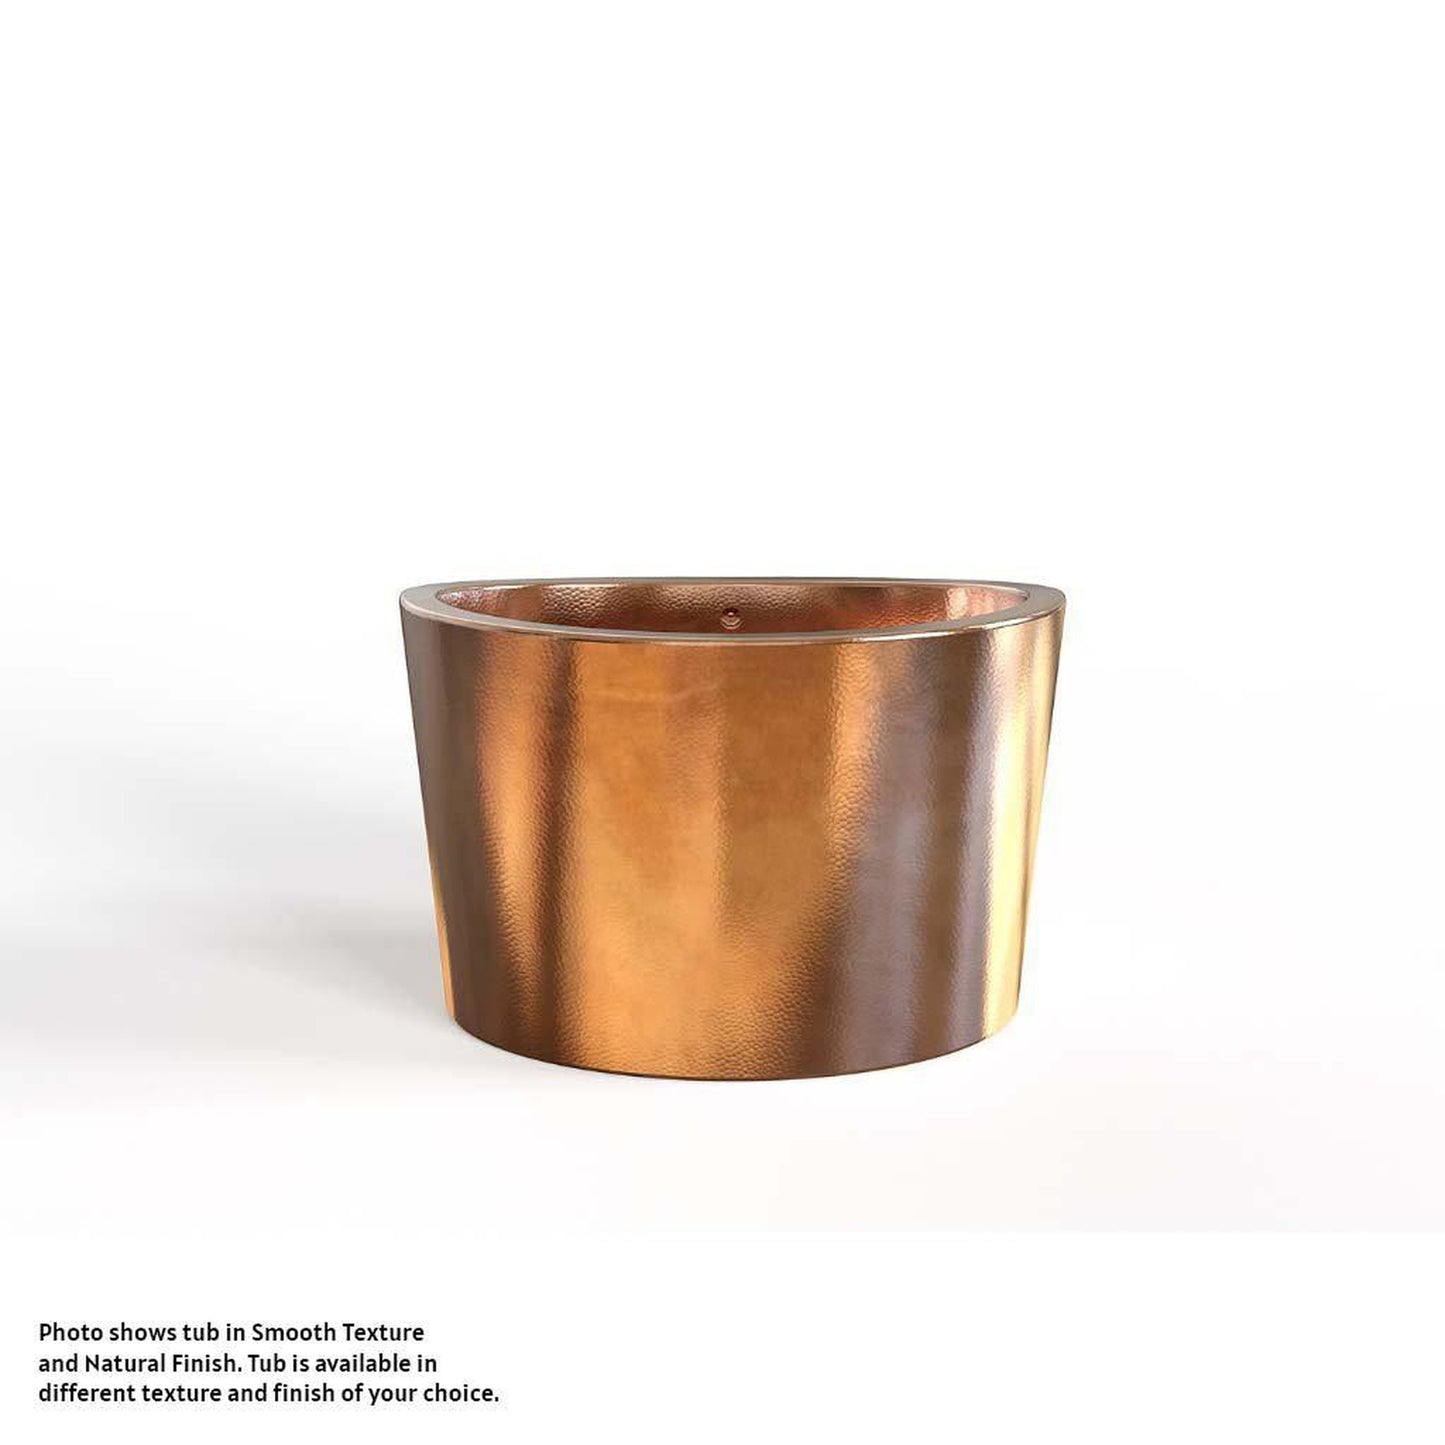 Amoretti Brothers Tokyo Spa 68" Freestanding Japanese Soaking Copper Tub in Copper Finish